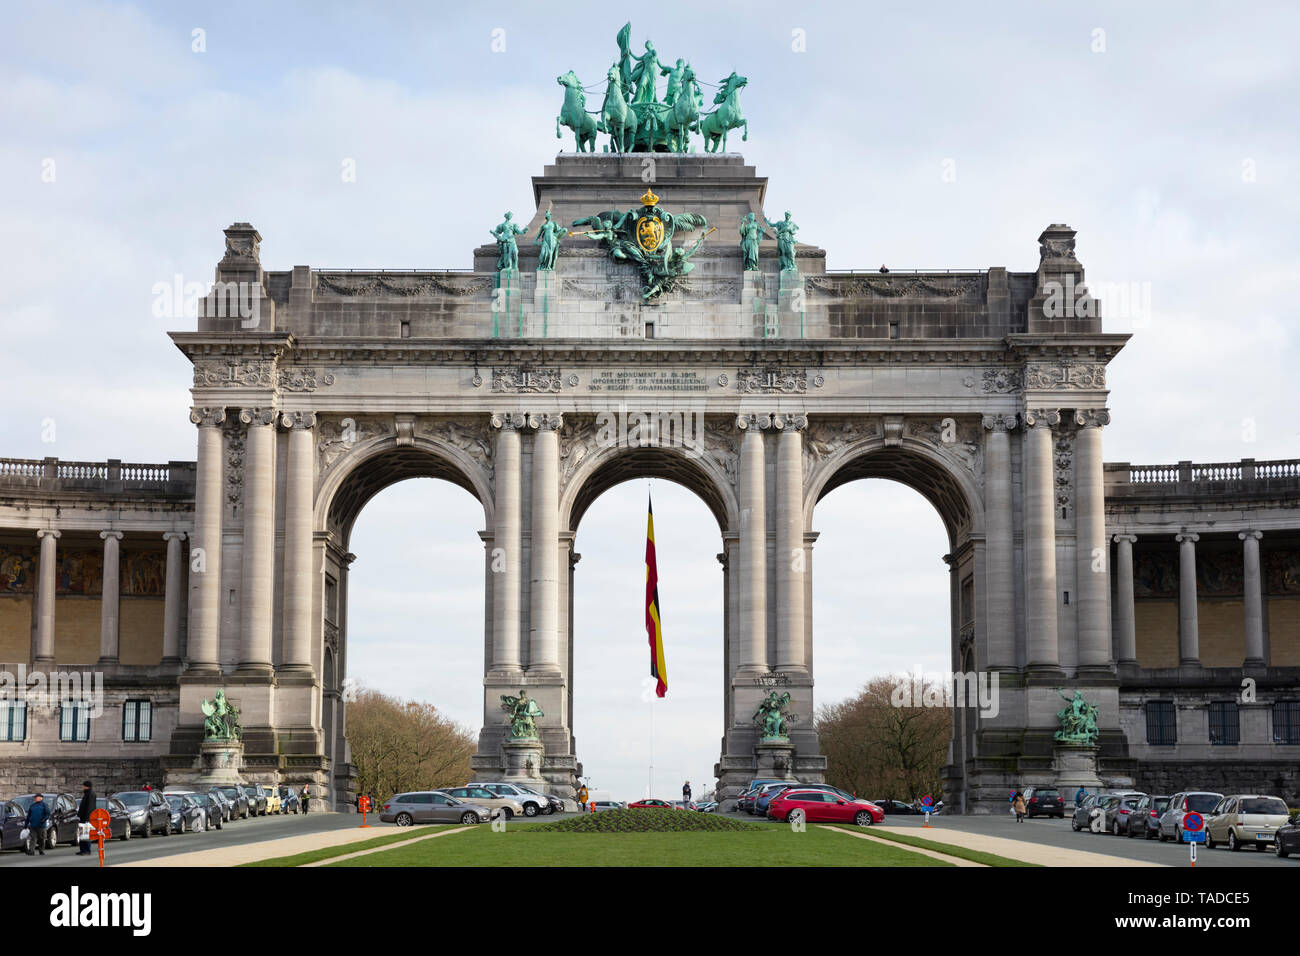 Belgium, Brussels, Triumphal arch Stock Photo